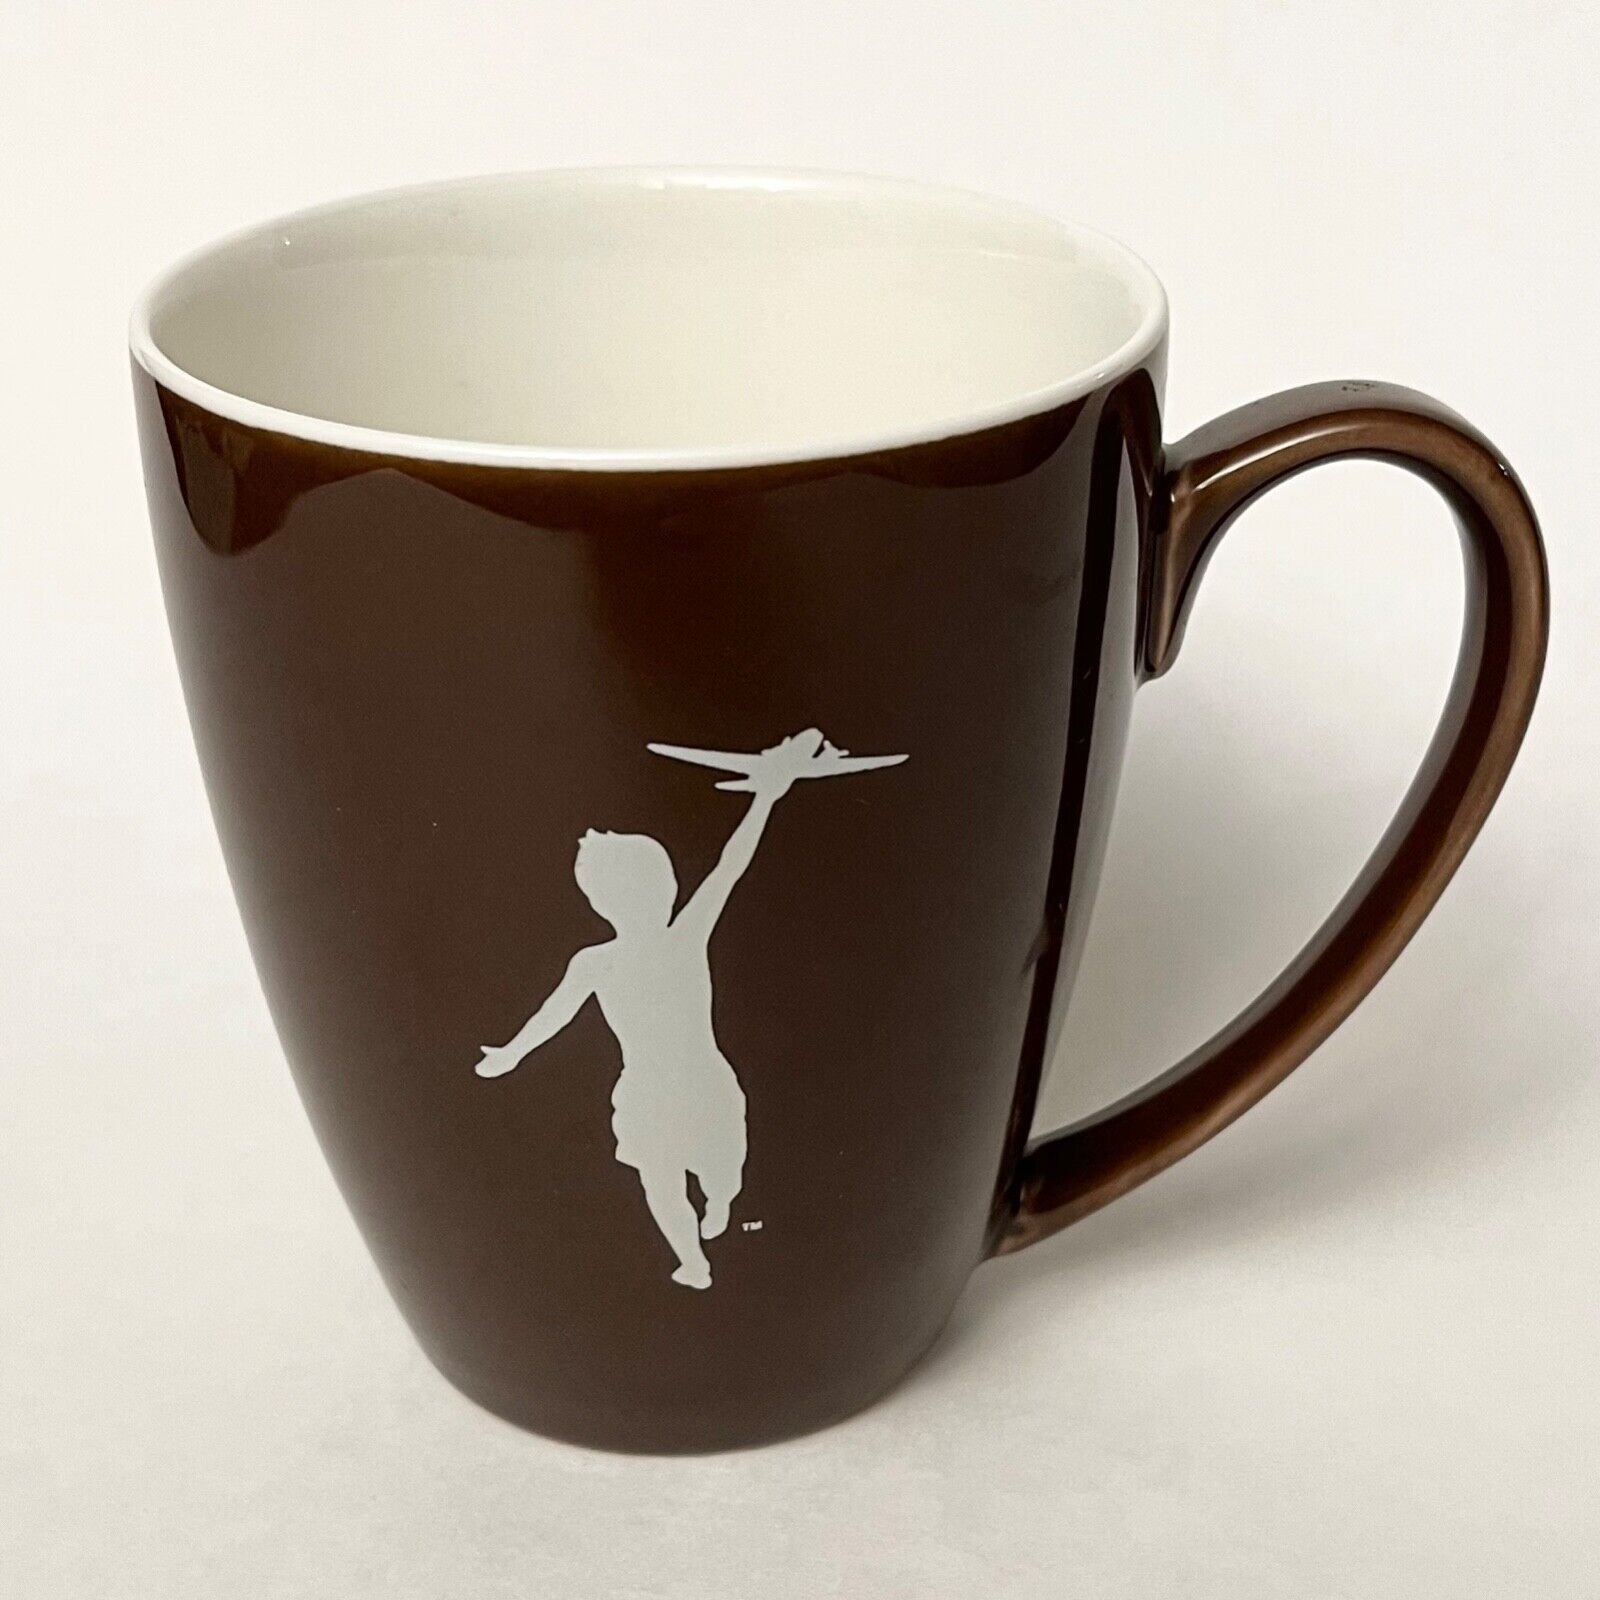 Storyville Coffee Company Mug